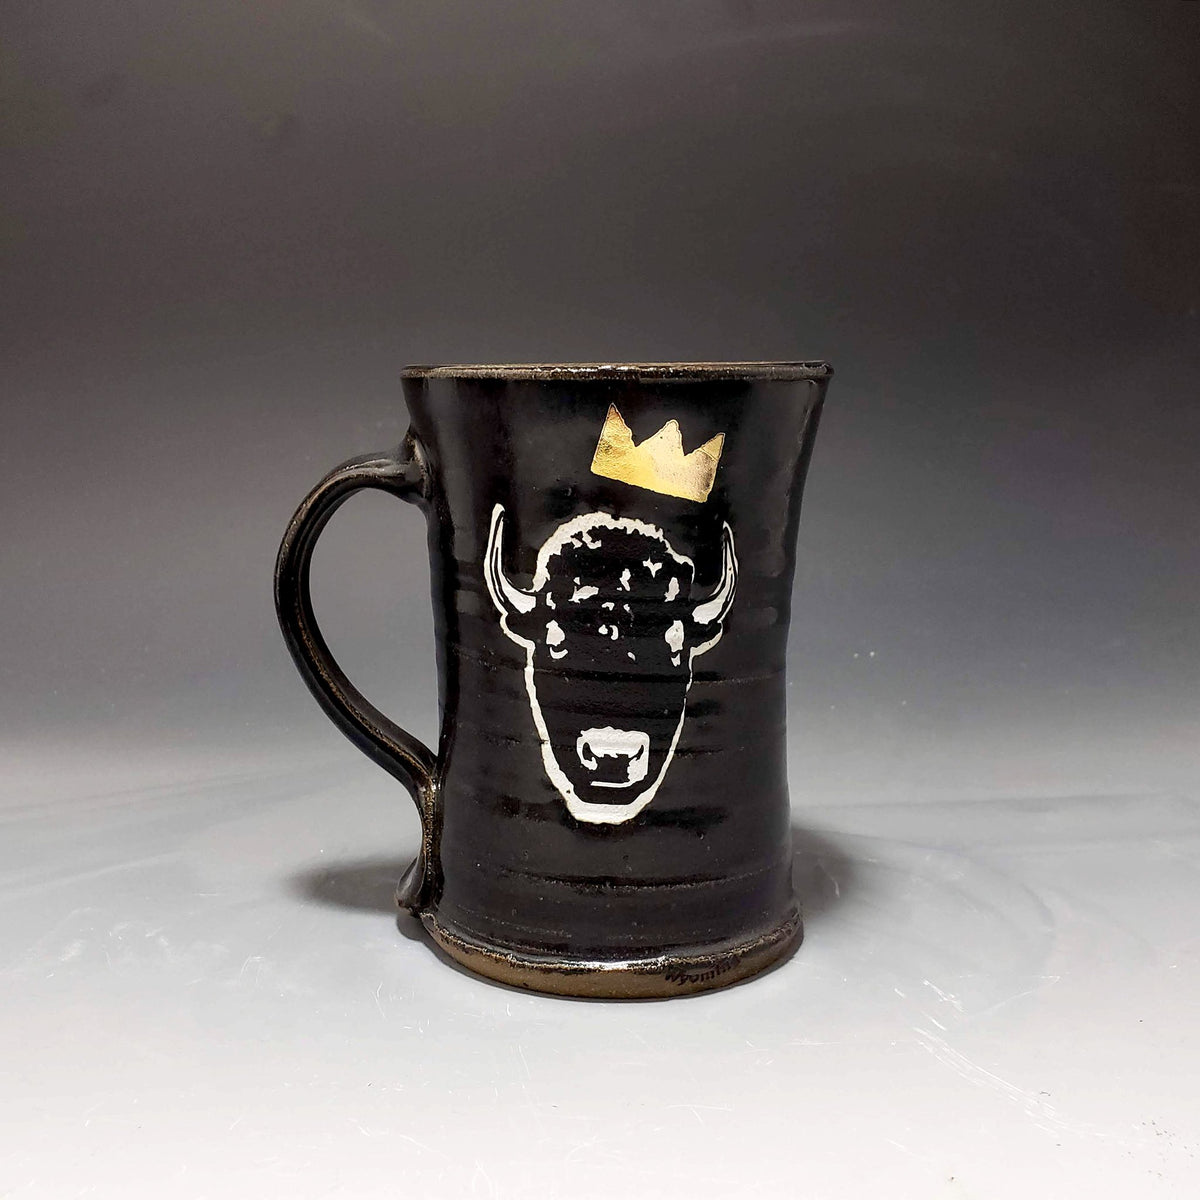 Black Ceramic Mug with a bison head wearing a gold lustre crown